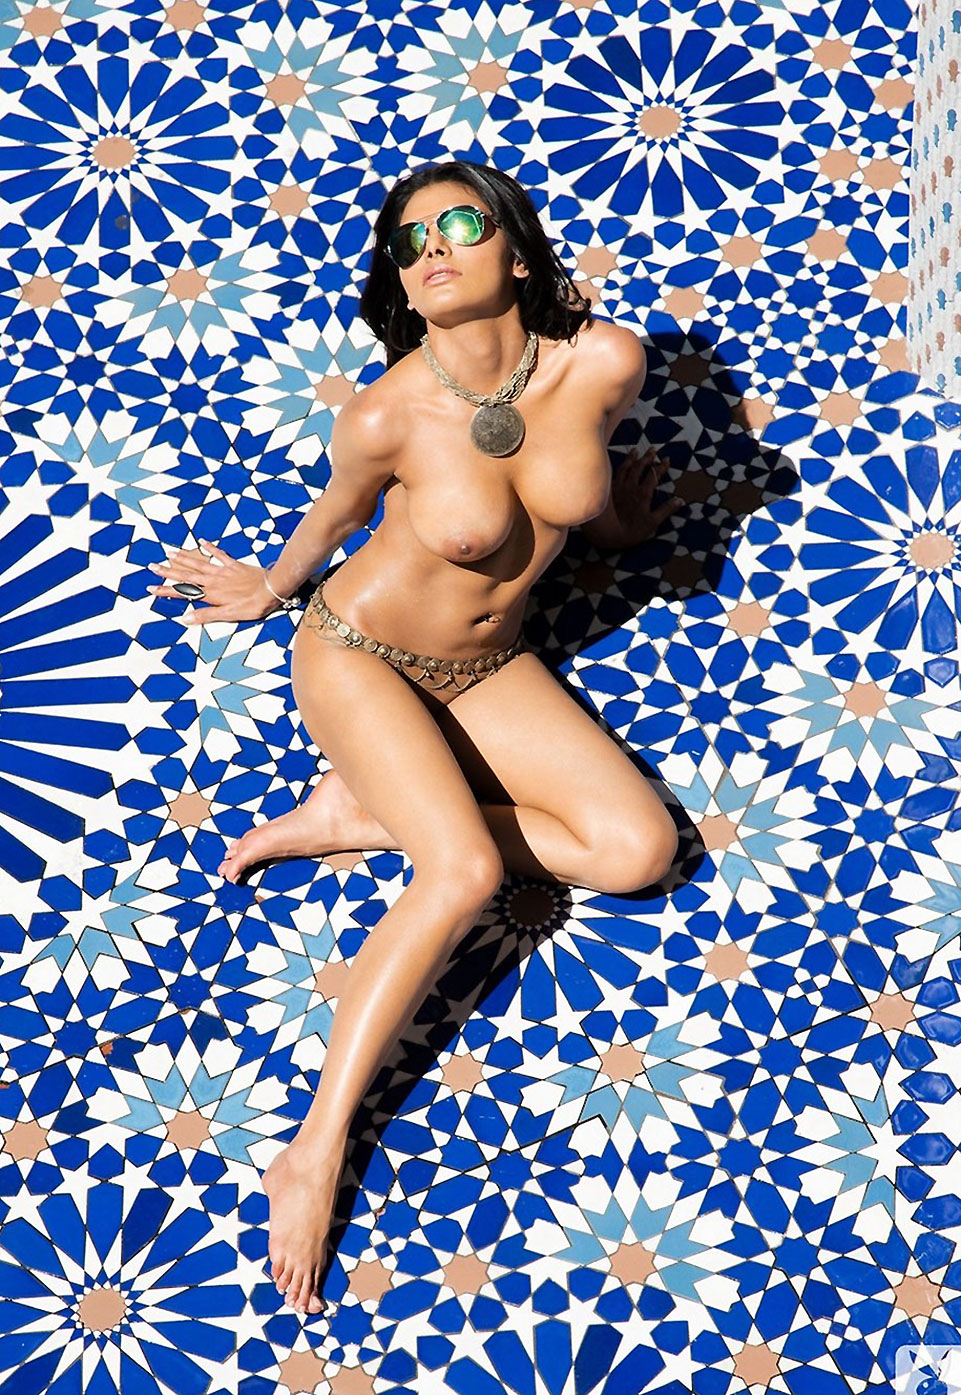 Sherlyn Chopra nude naked pussy topless sexy hot topless bikini63